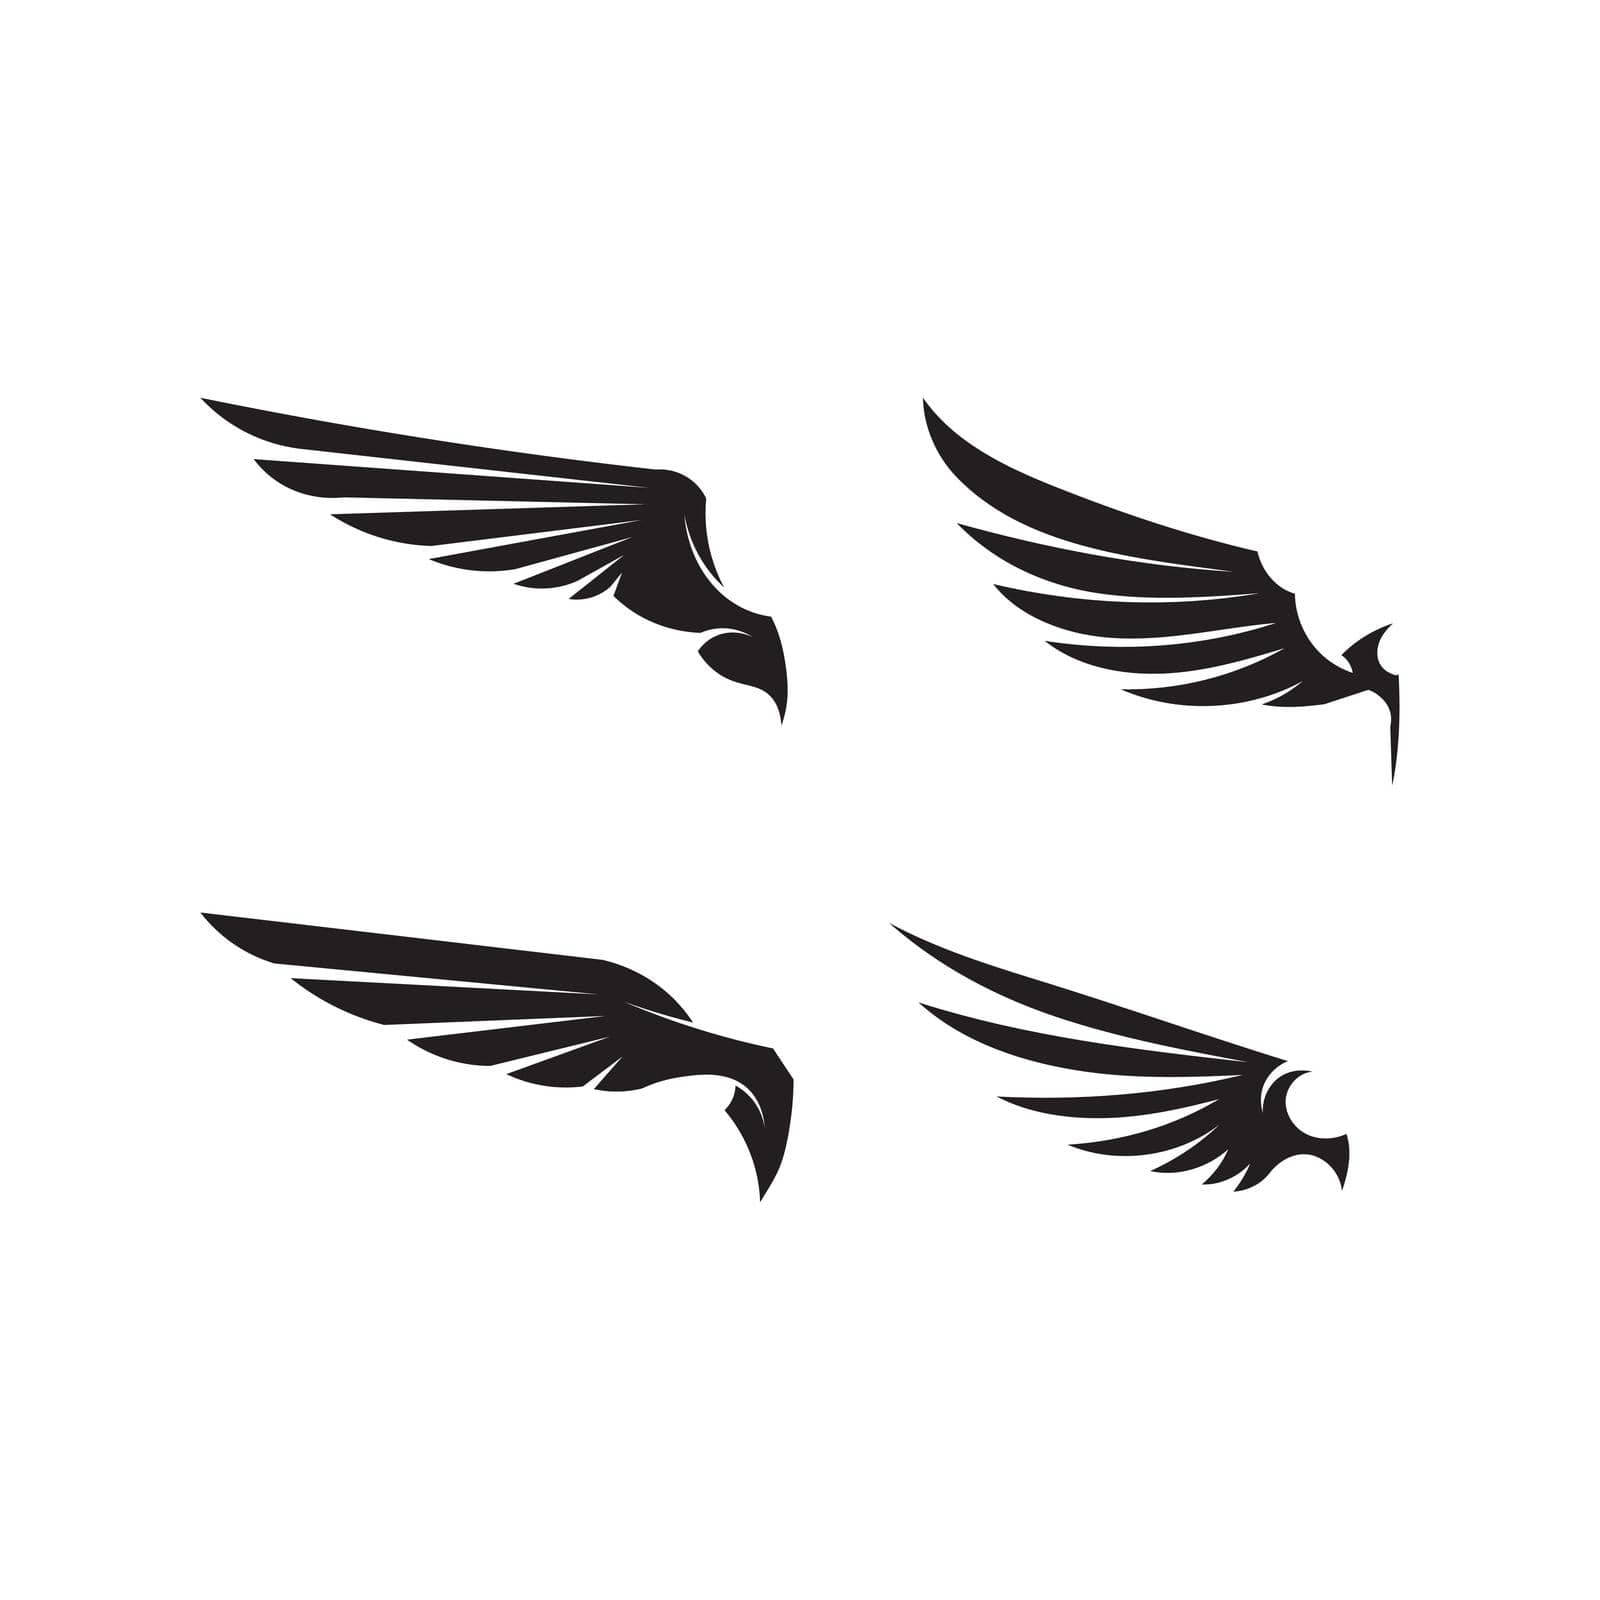 Black wing logo symbol for a professional designer by Anggasaputro